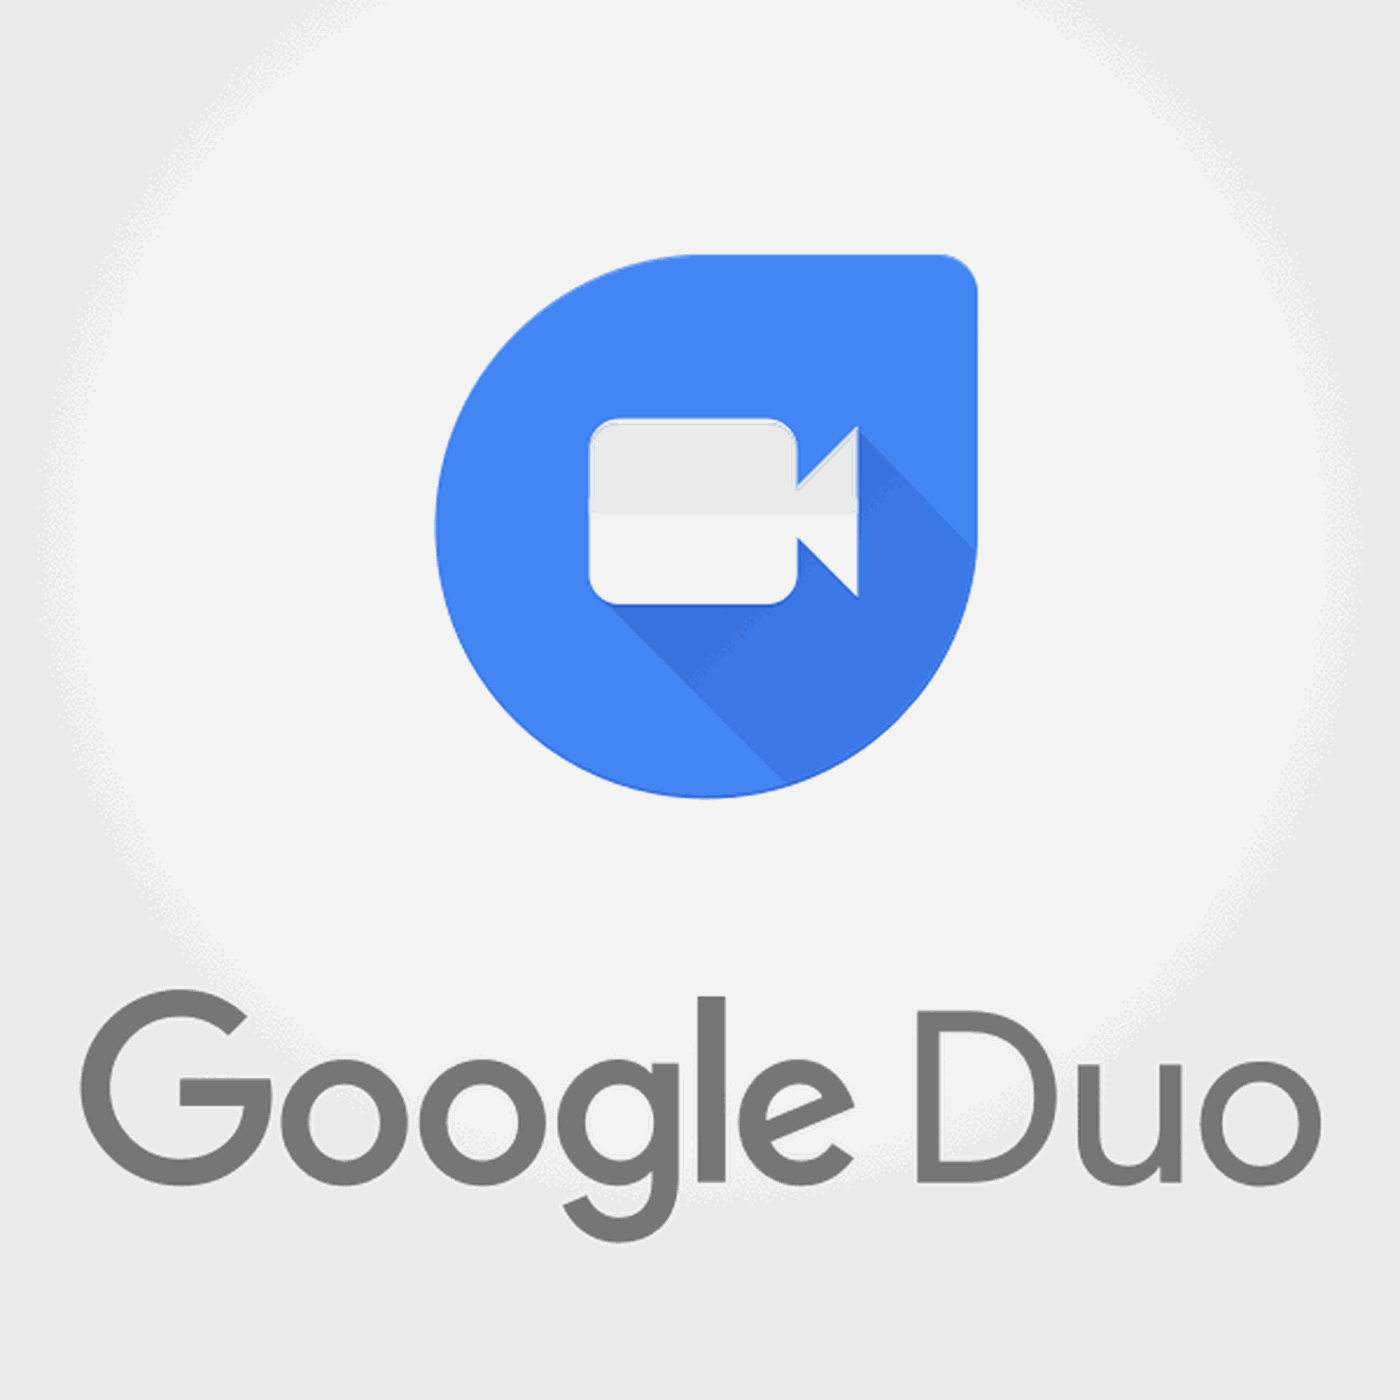 google duo download windows 10